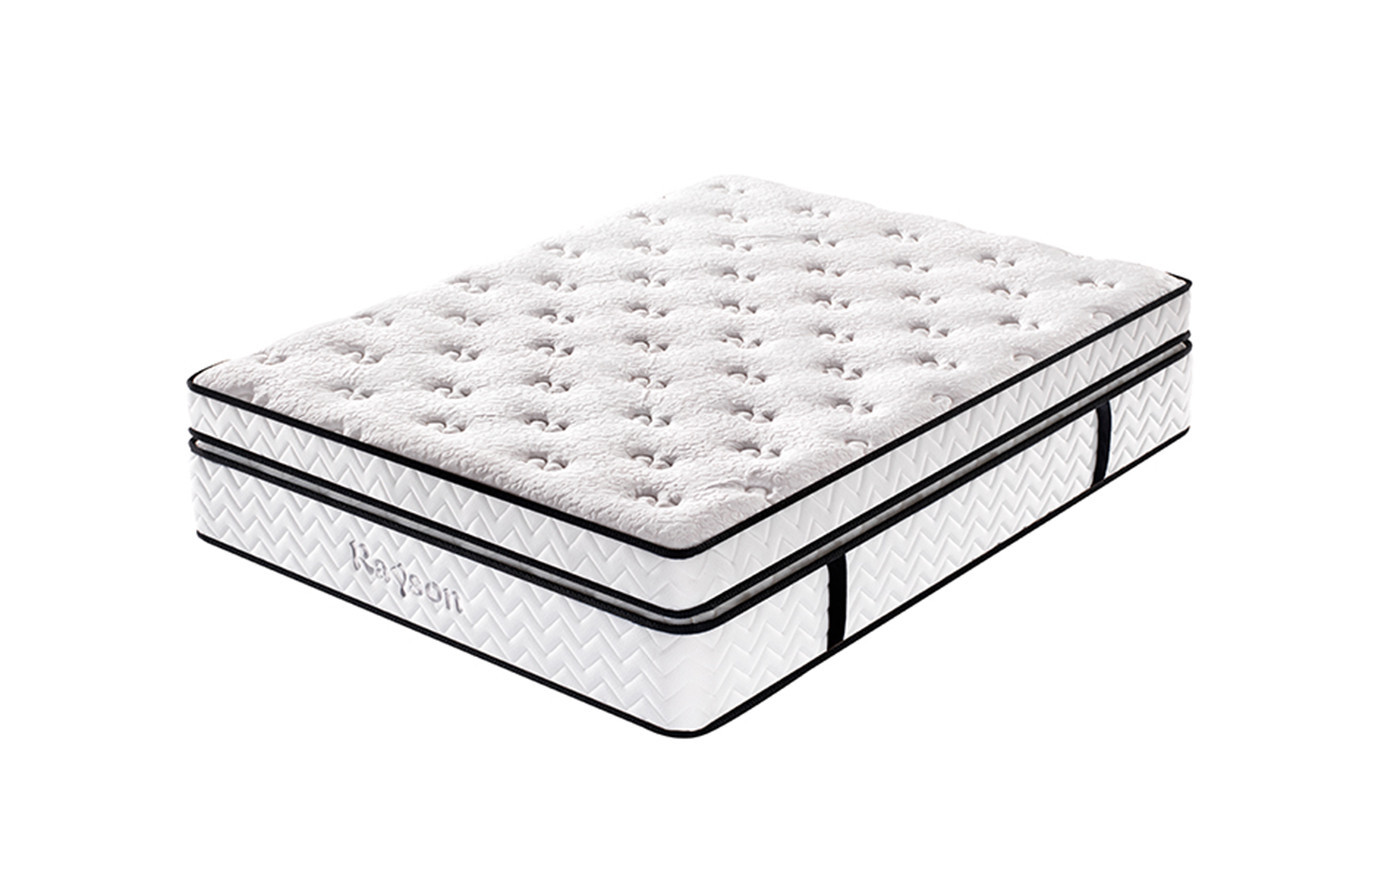 w hotel mattress mattress rsb2bt inch Synwin Brand